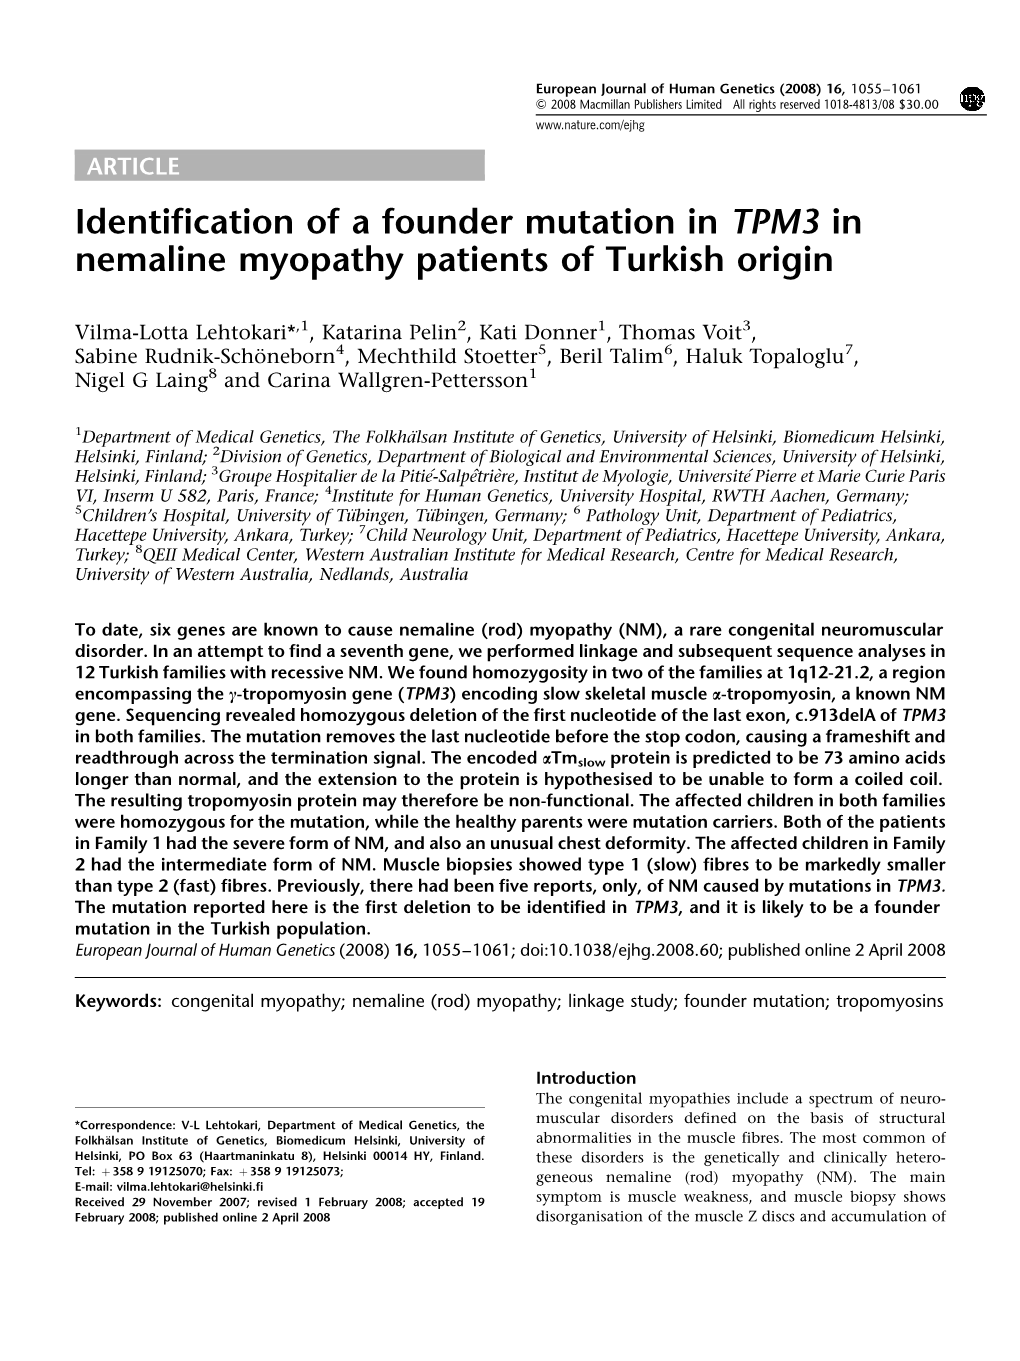 Identification of a Founder Mutation in TPM3 in Nemaline Myopathy Patients of Turkish Origin